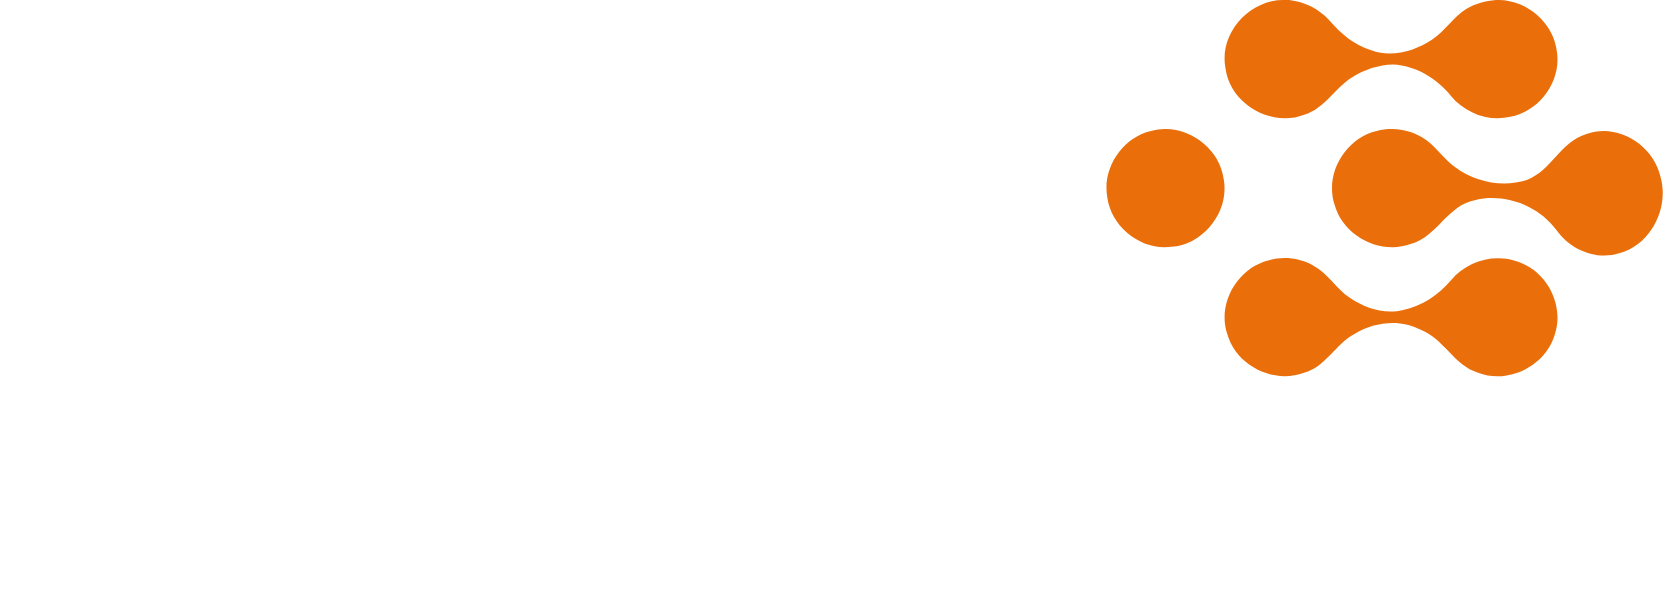 Keyera logo grand pour les fonds sombres (PNG transparent)